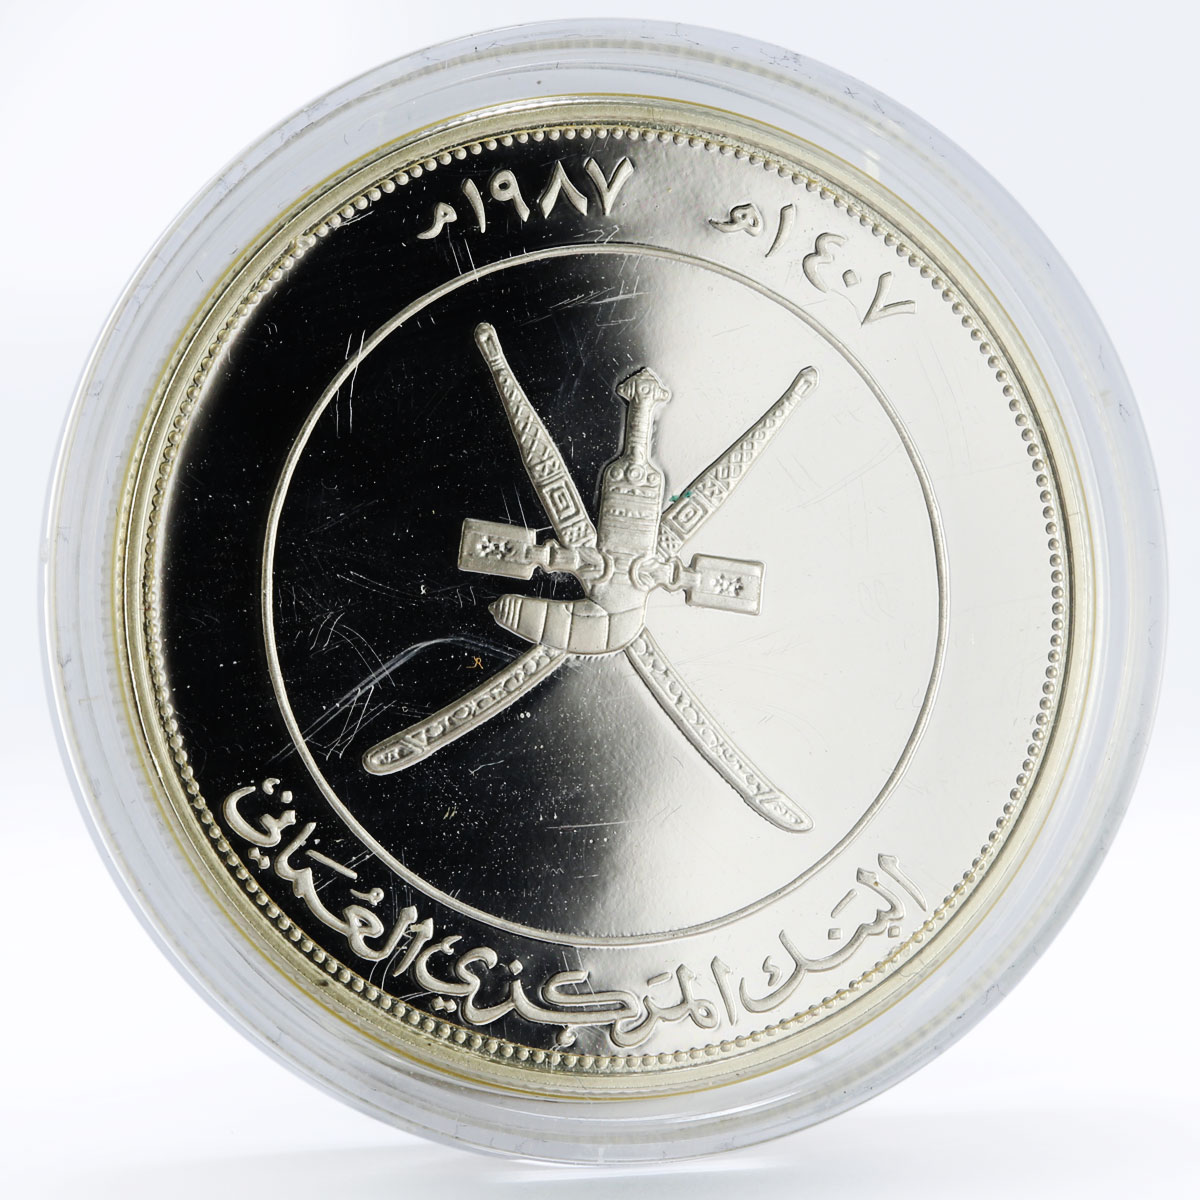 Oman 2,5 rials World Wildlife Fund Fauna Verreaux's Eagle Bird silver coin 1987